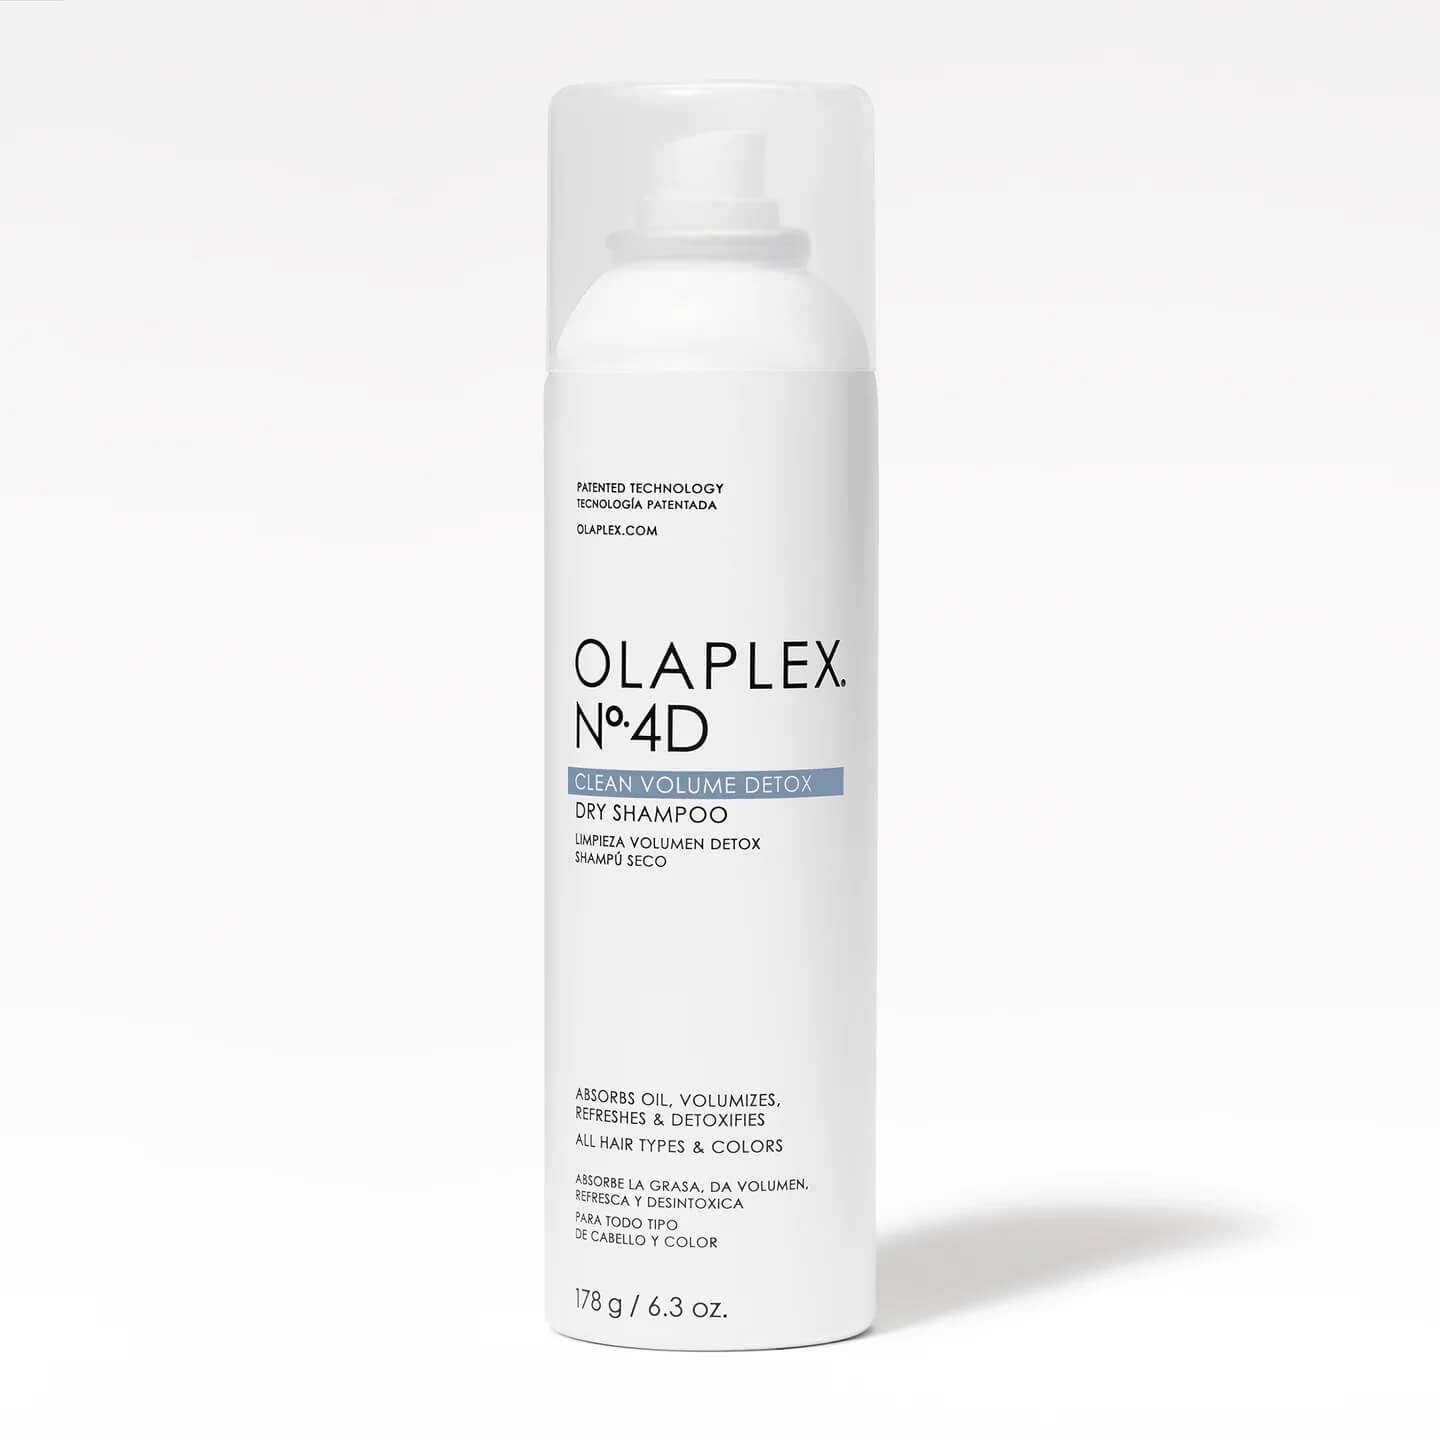 Olaplex No.4D Dry Shampoo product image